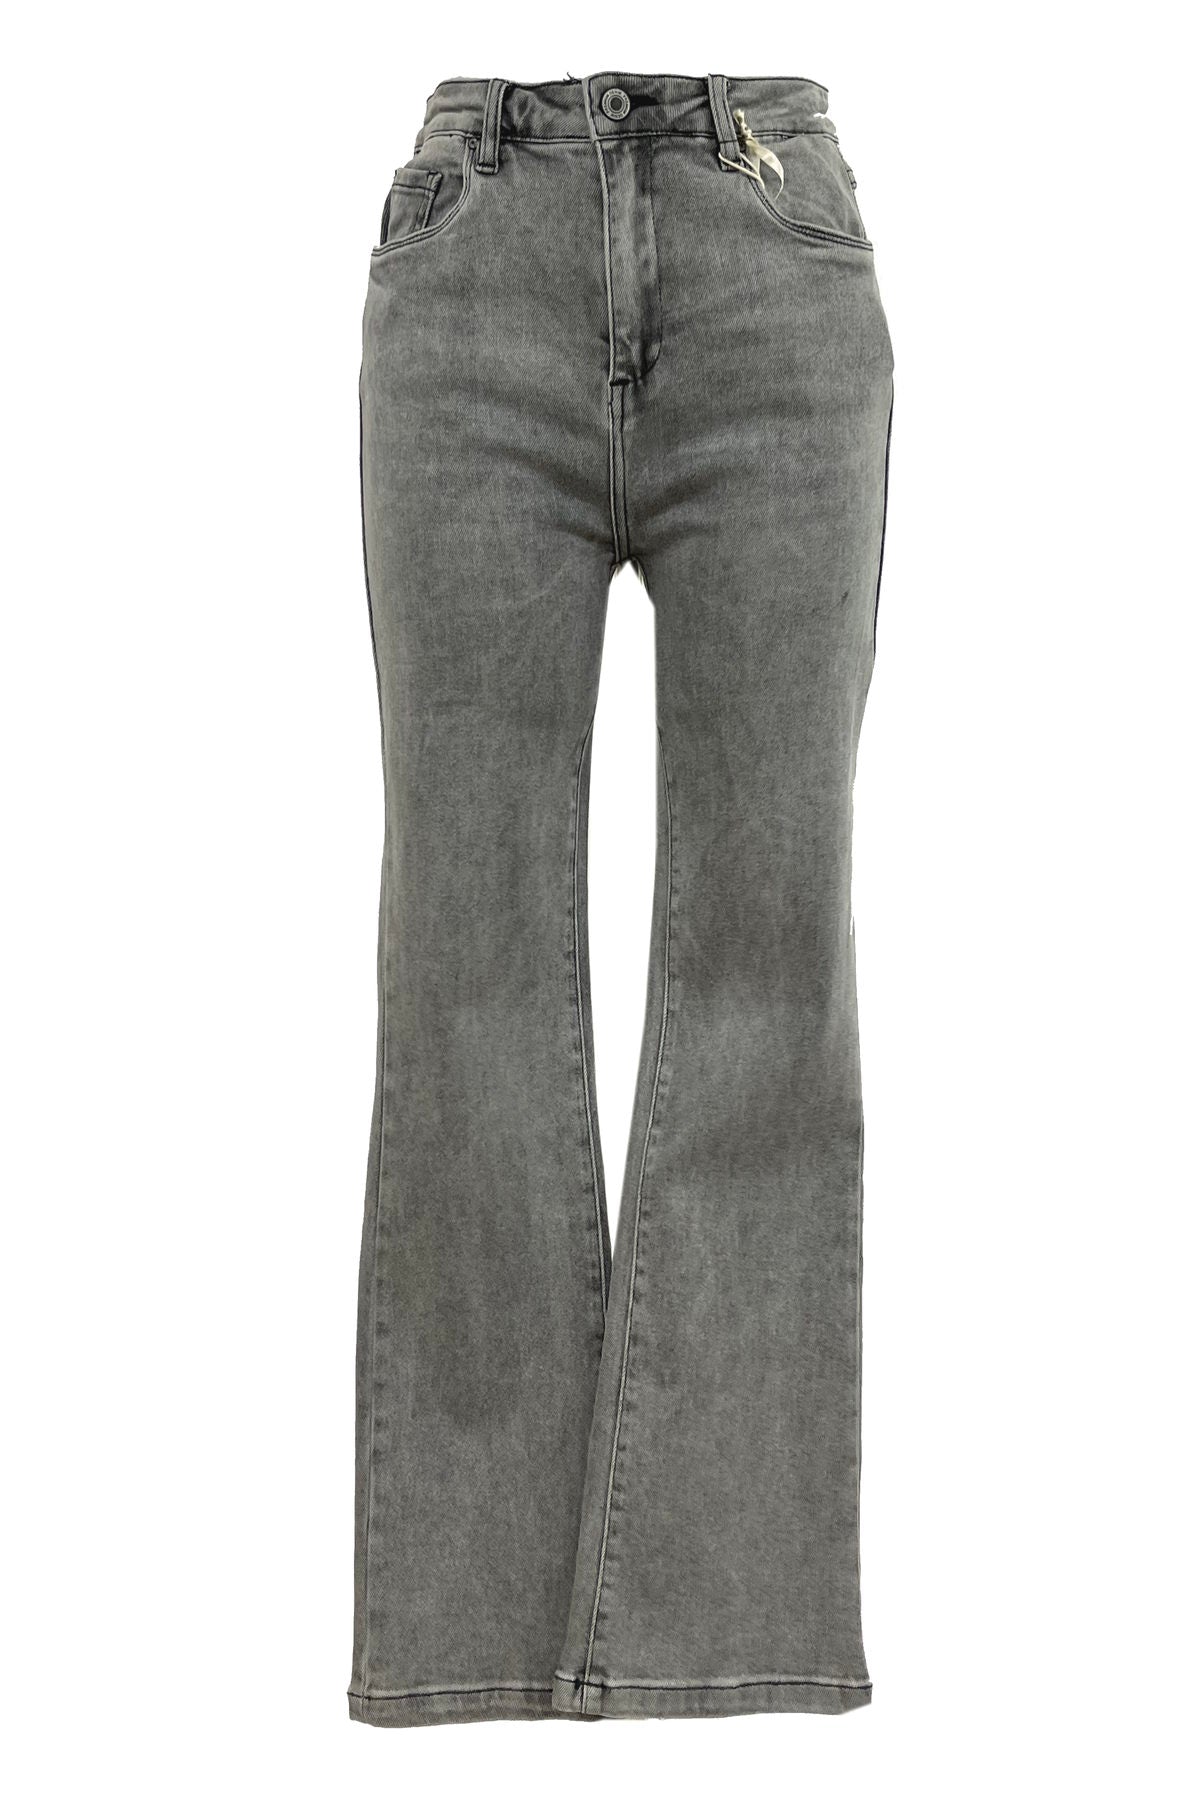 Jeans, Brand Ad Blanco, art. AD022